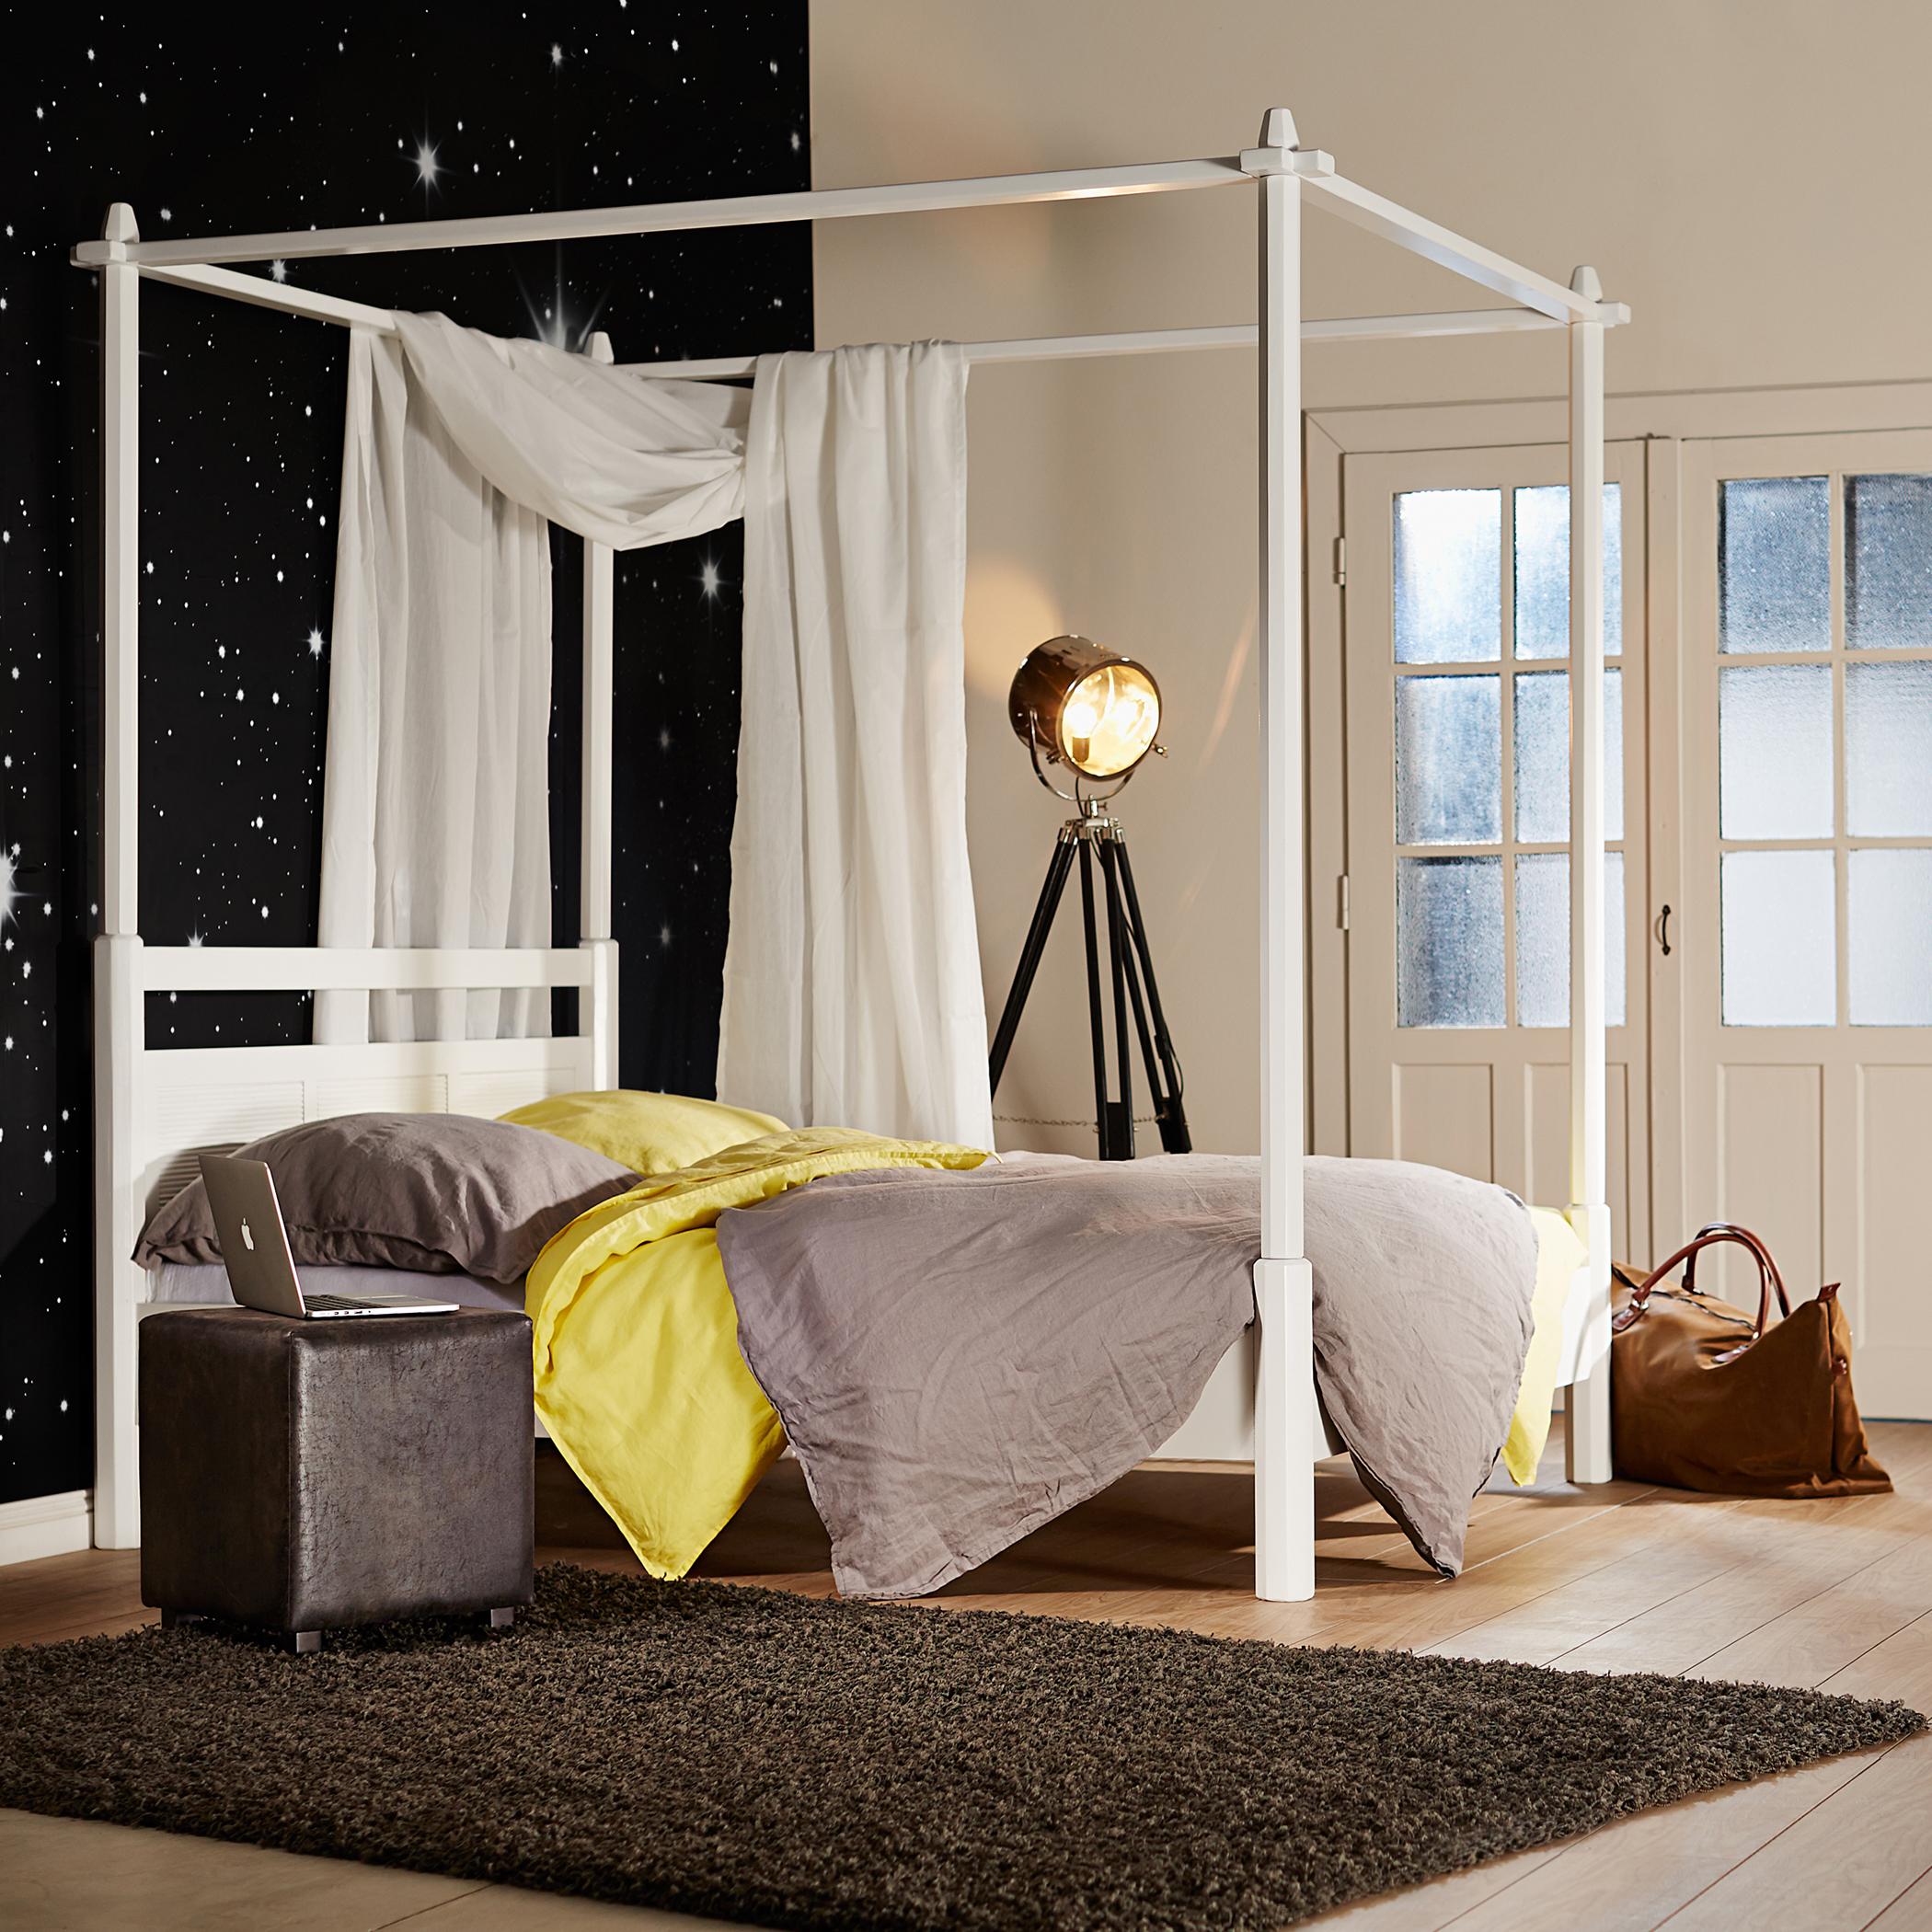 Fototapete mit Sternen #bett #teppich #himmelbett #fototapete #schlafzimmerbeleuchtung ©Butlers